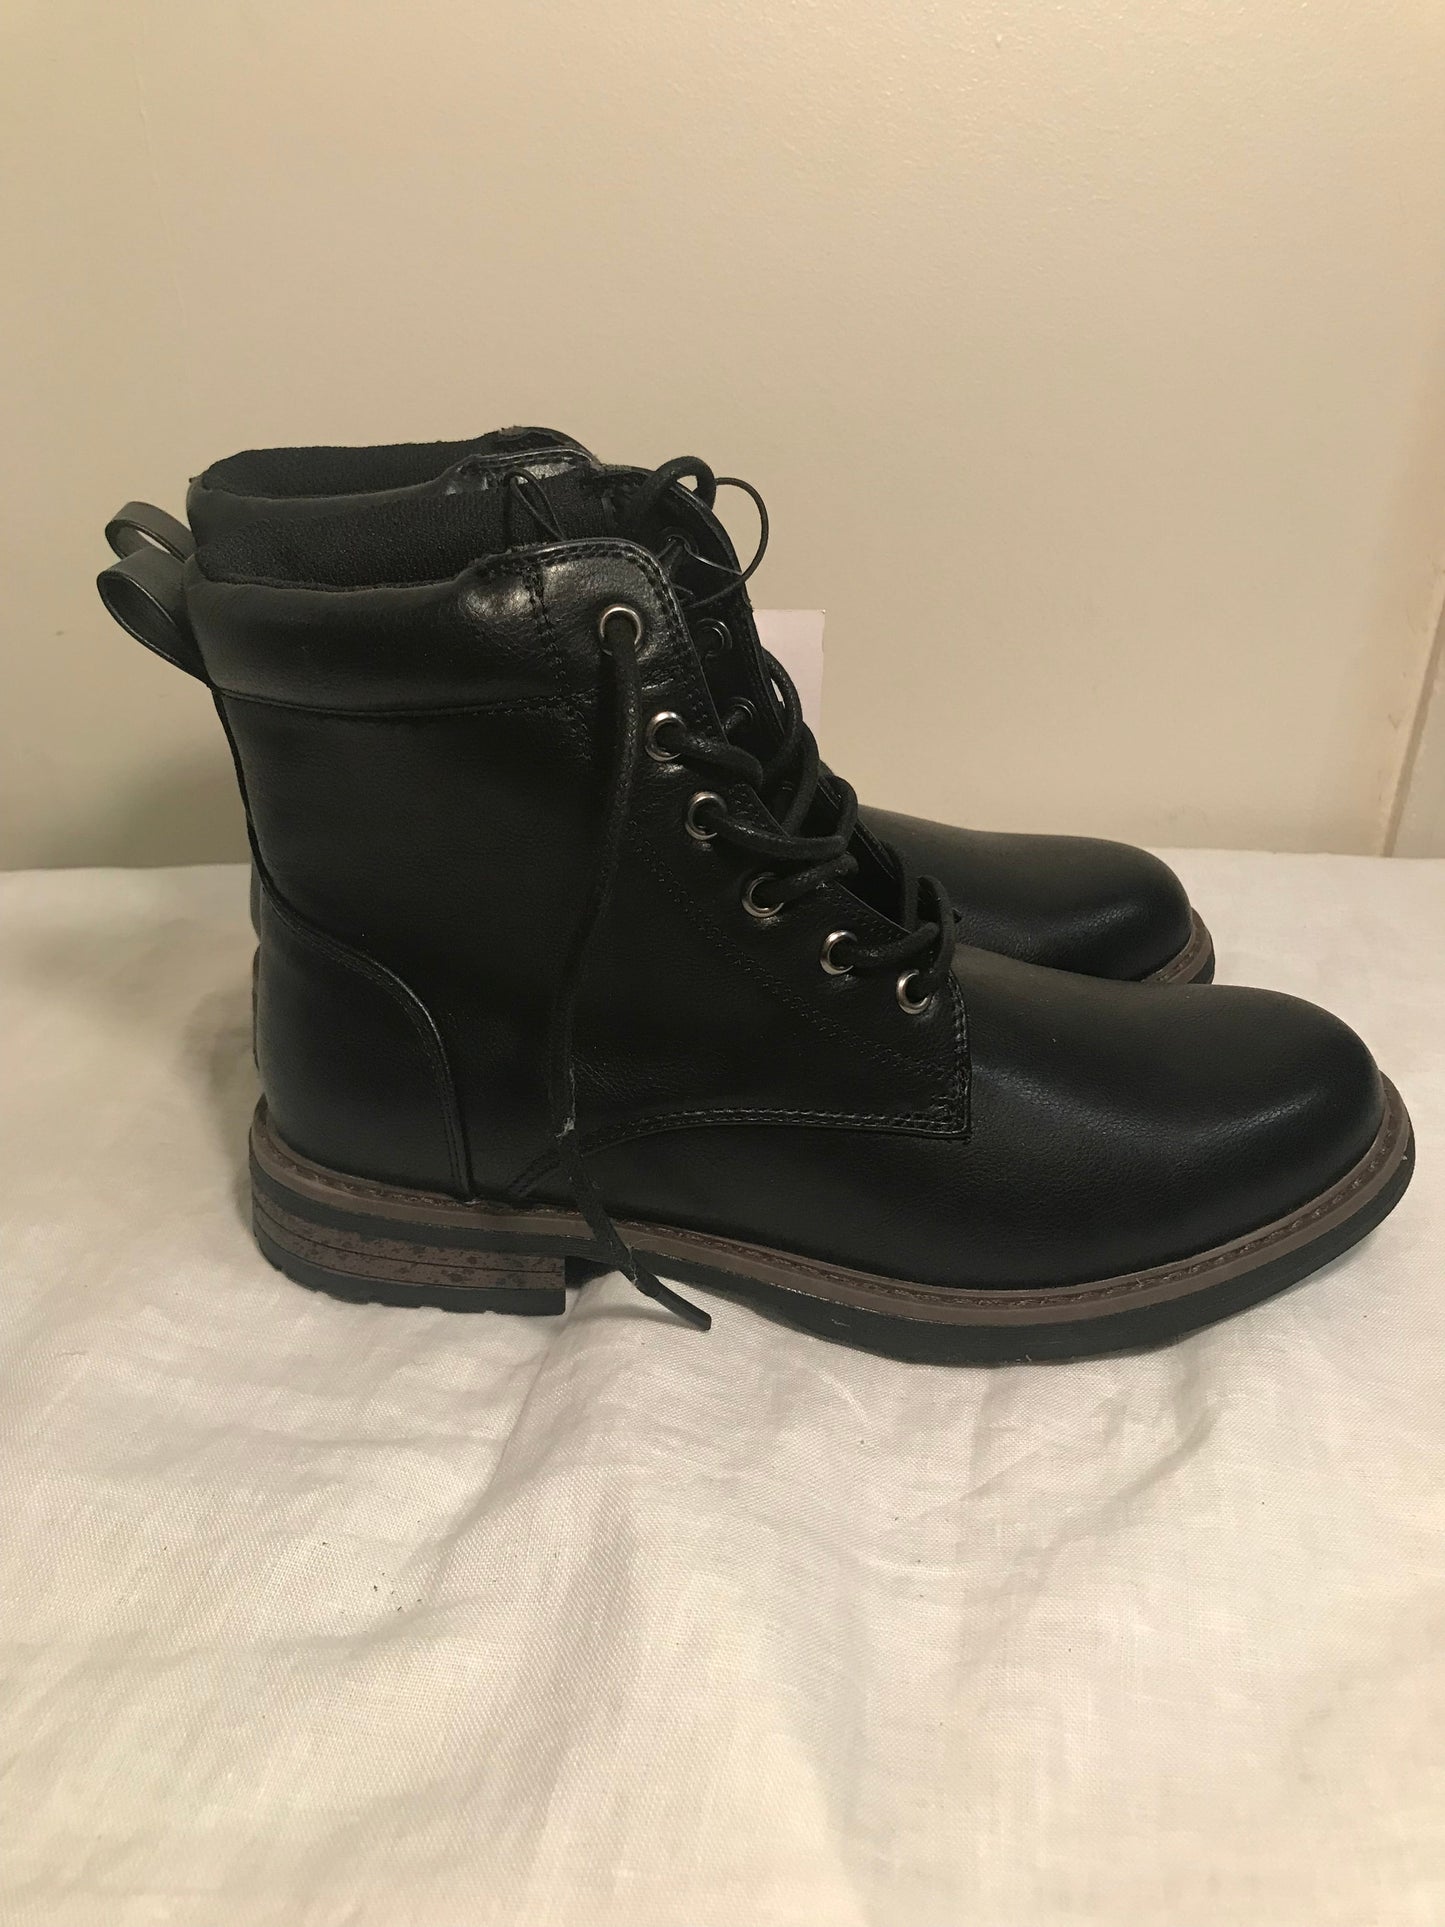 Boy's Black/Jeffery Boots Size 8